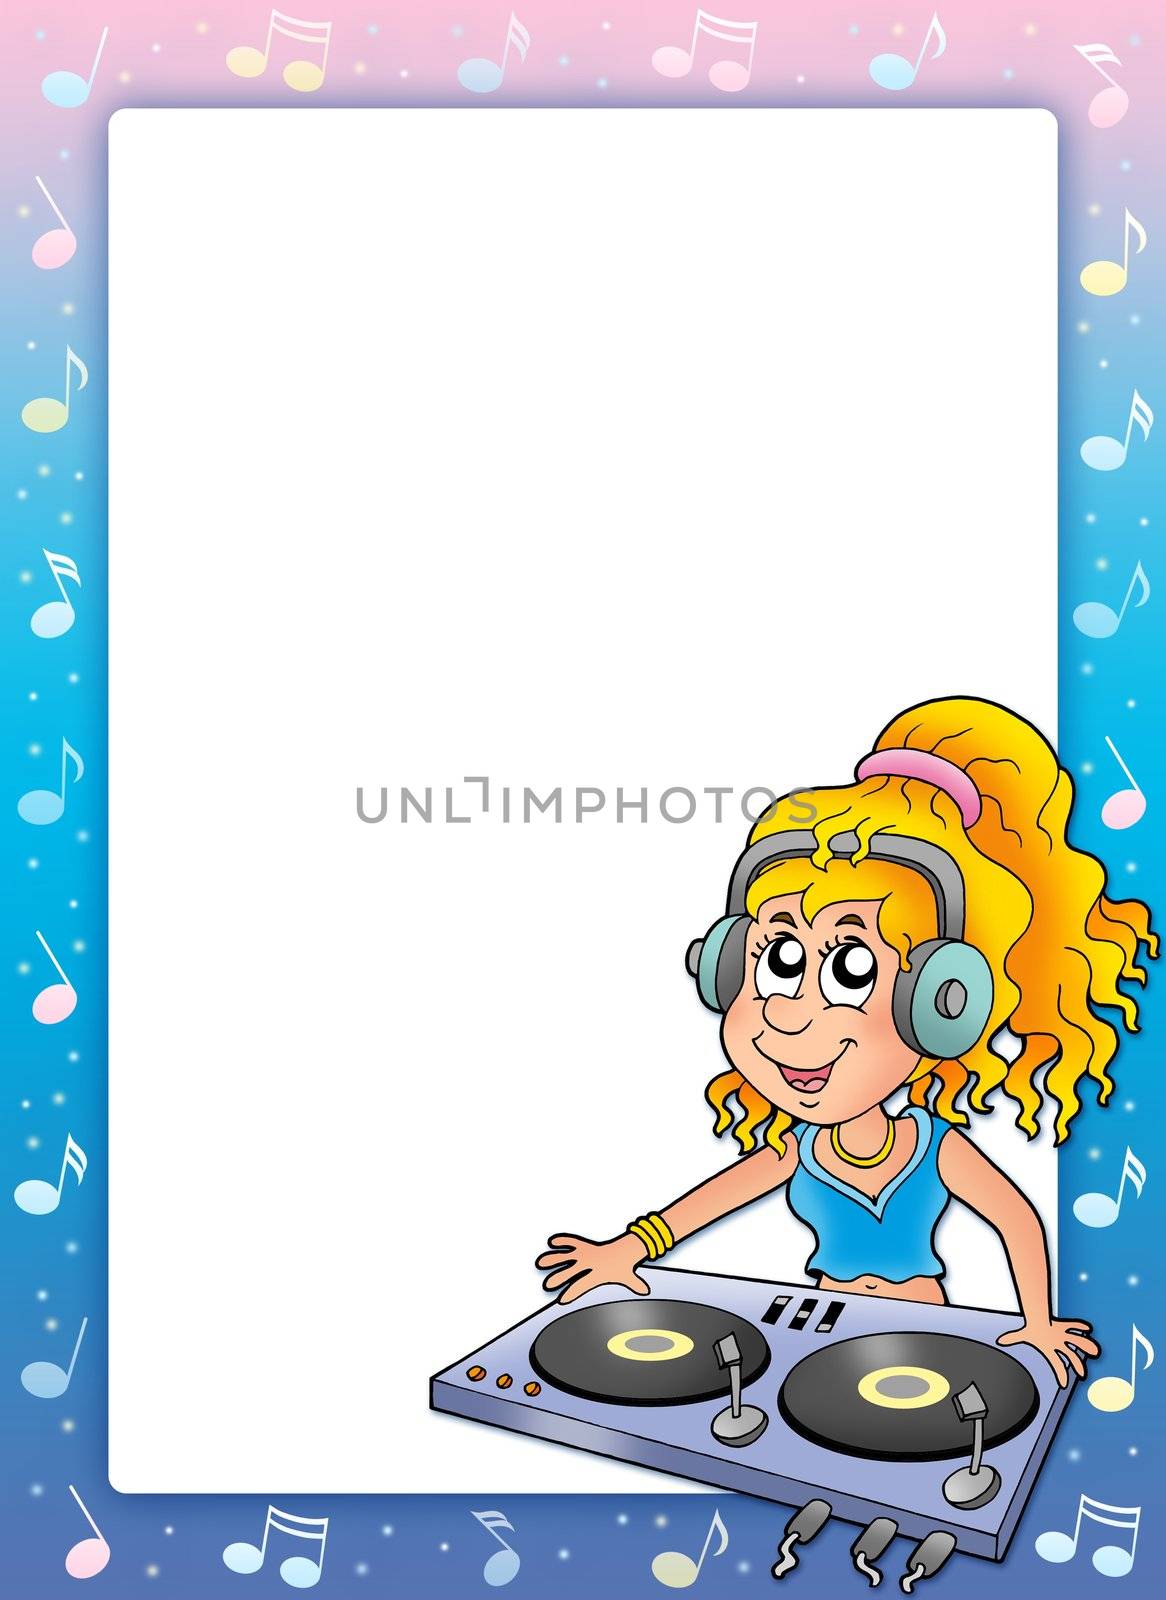 Music frame with cartoon DJ girl - color illustration.